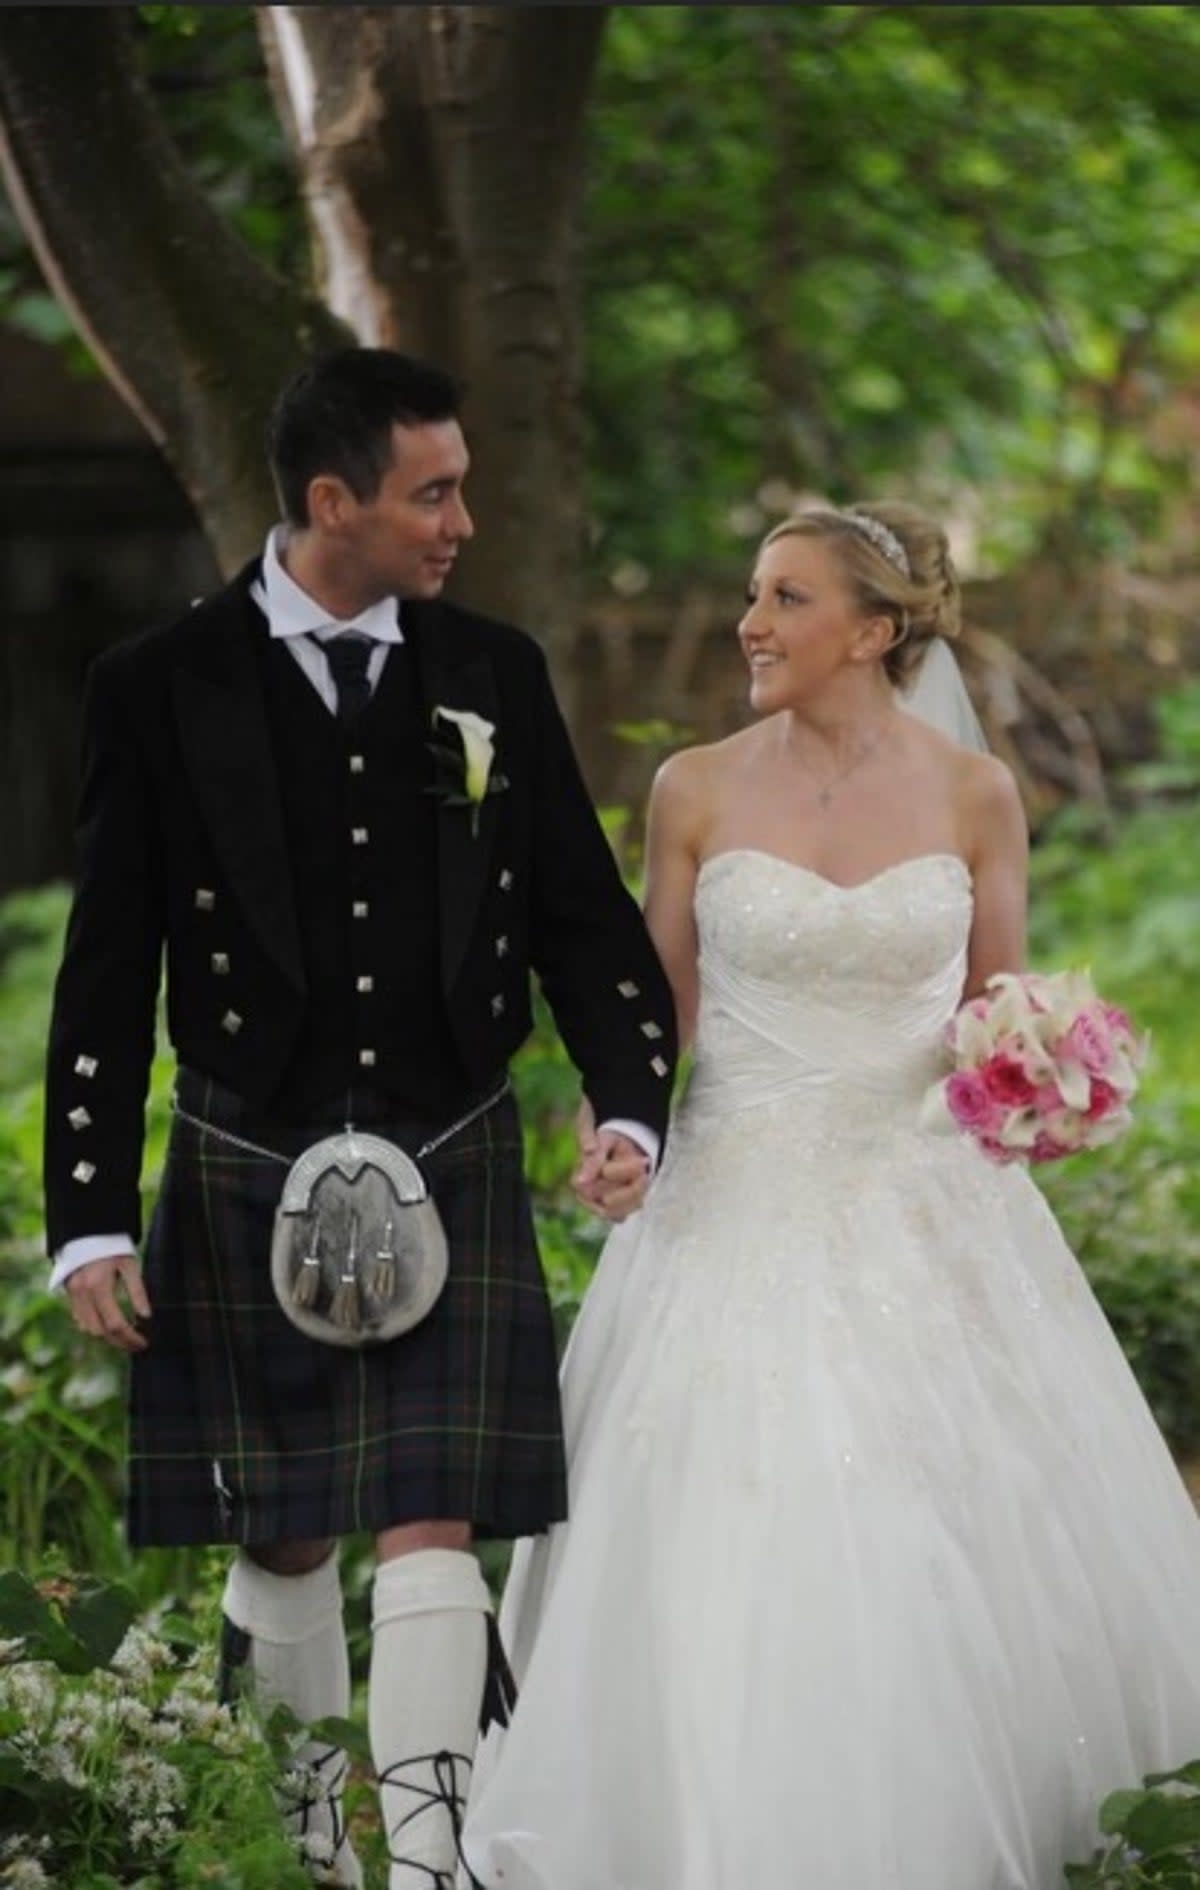 The happy couple on their wedding day (Shona Maclaren / SWNS)